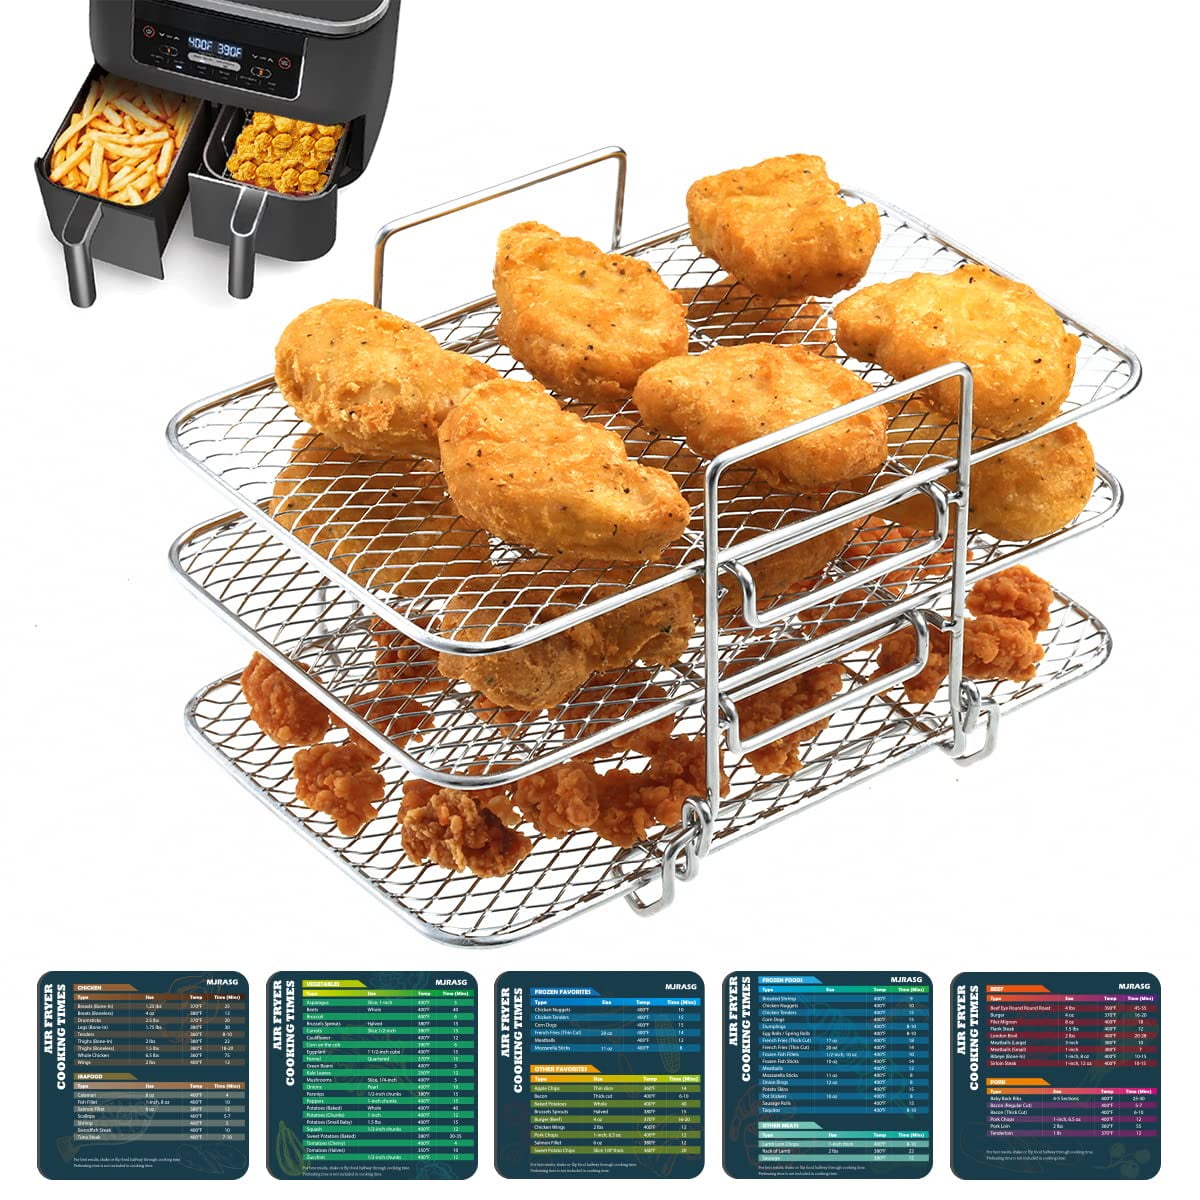 TuTuYa Air Fryer Rack for Ninja Dual Air Fryer DZ201/401 & Most